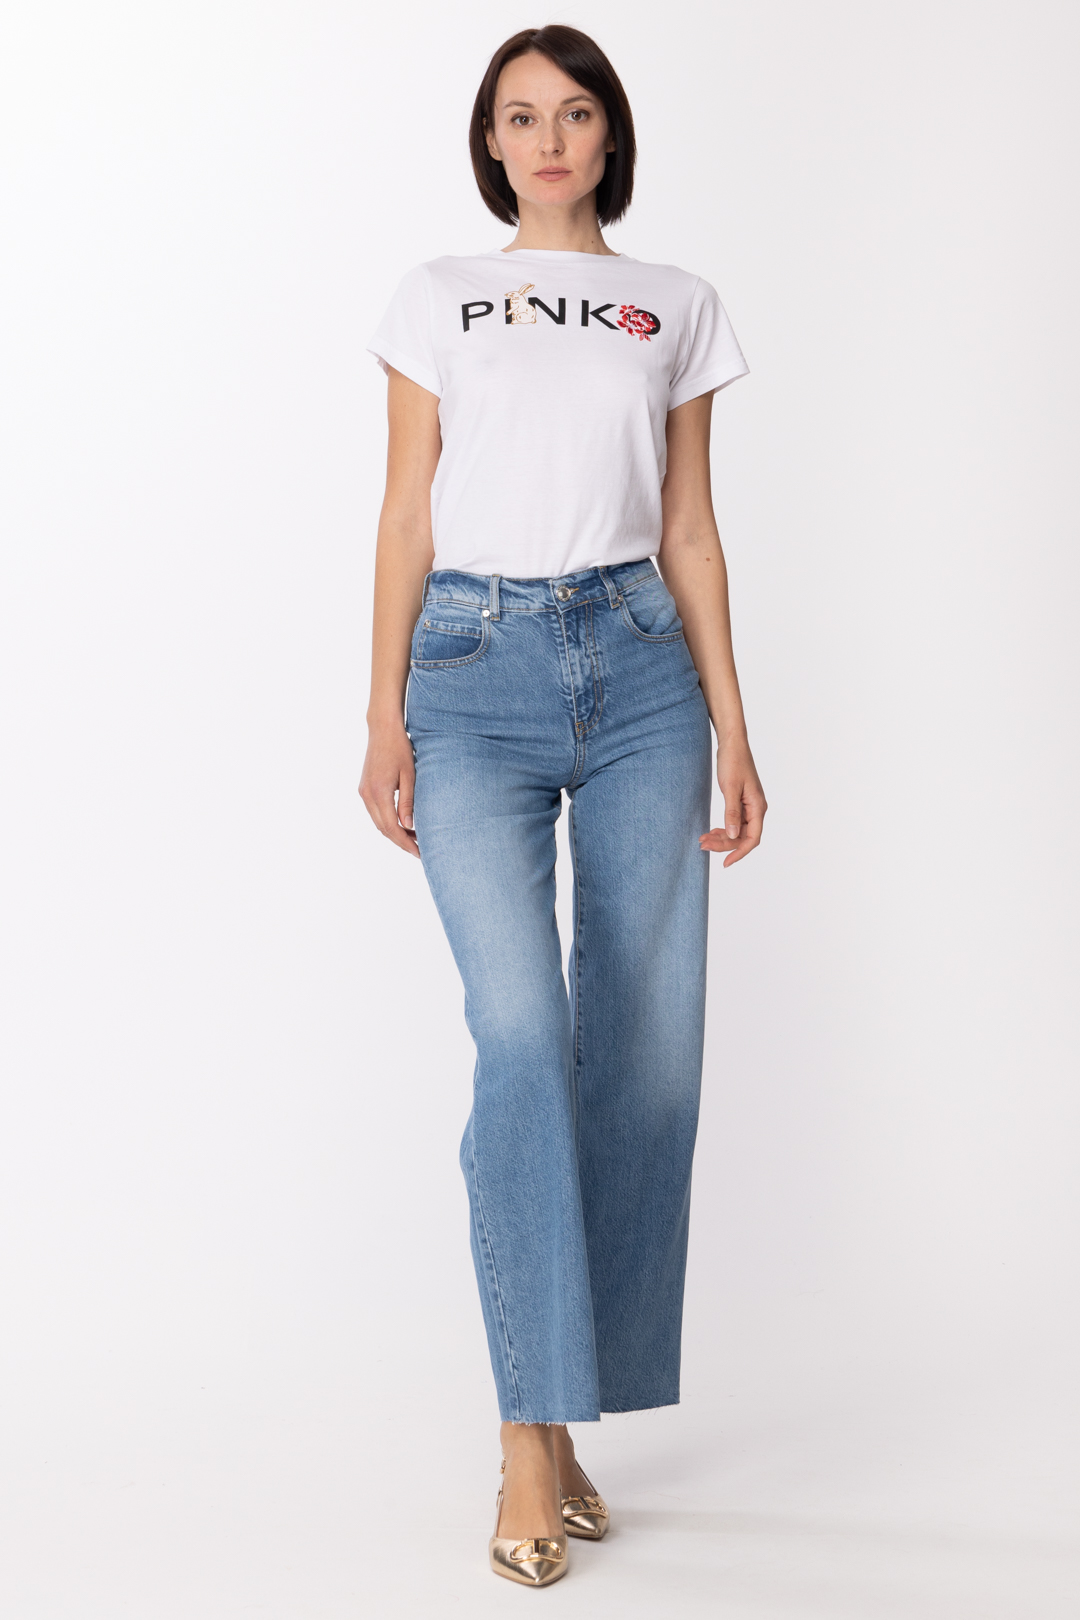 Preview: Pinko High-waisted wide jeans LAVAGGIO STONE MEDIO CHIARO